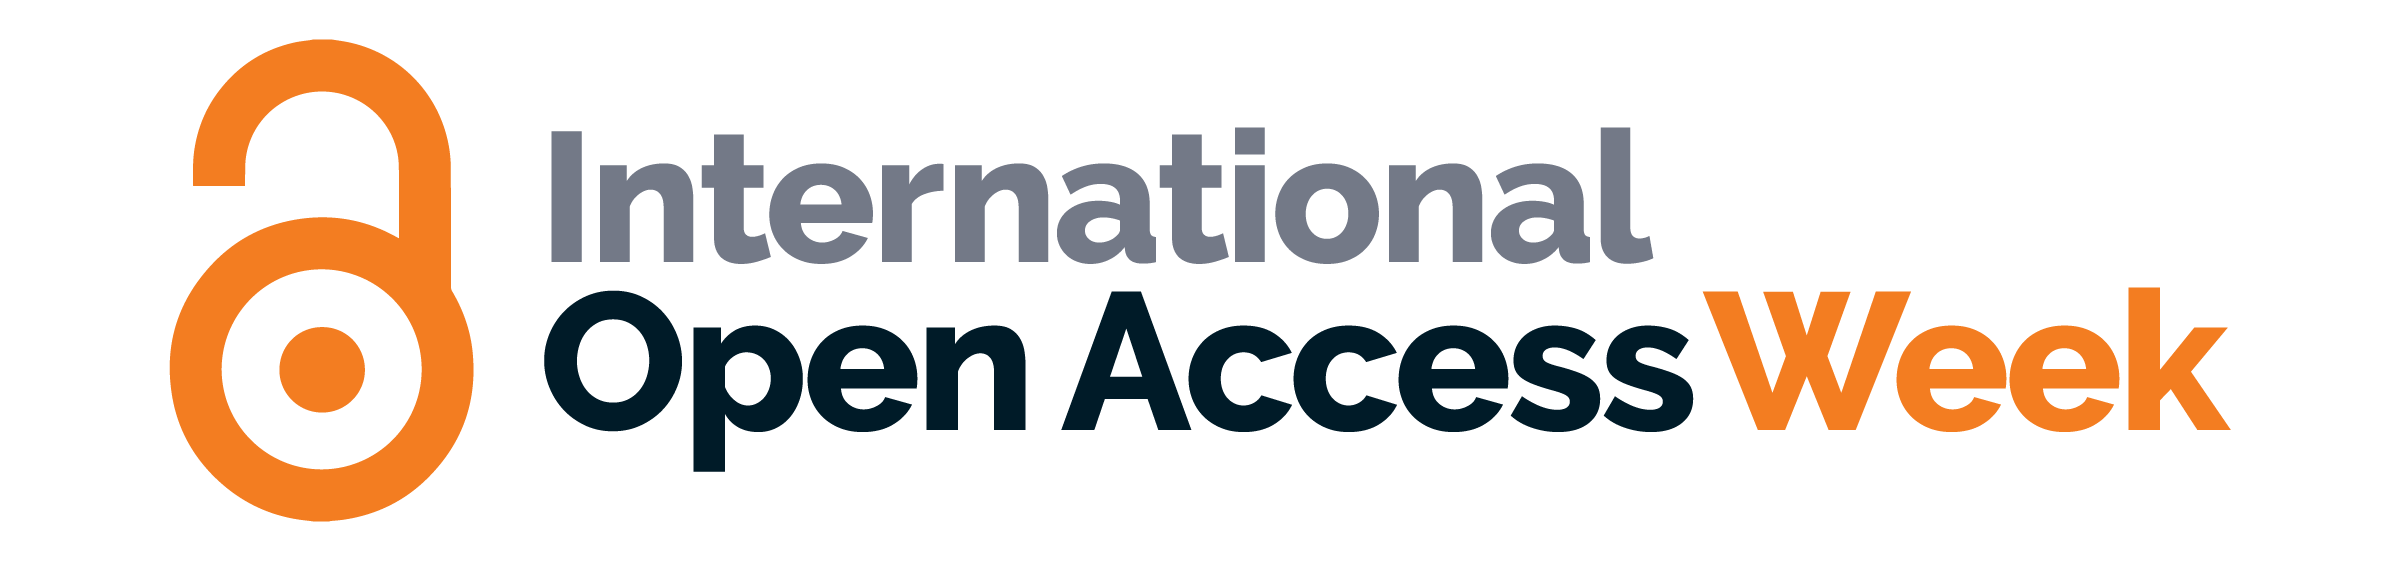 international open access week logo with orange stylized combination lock symbol